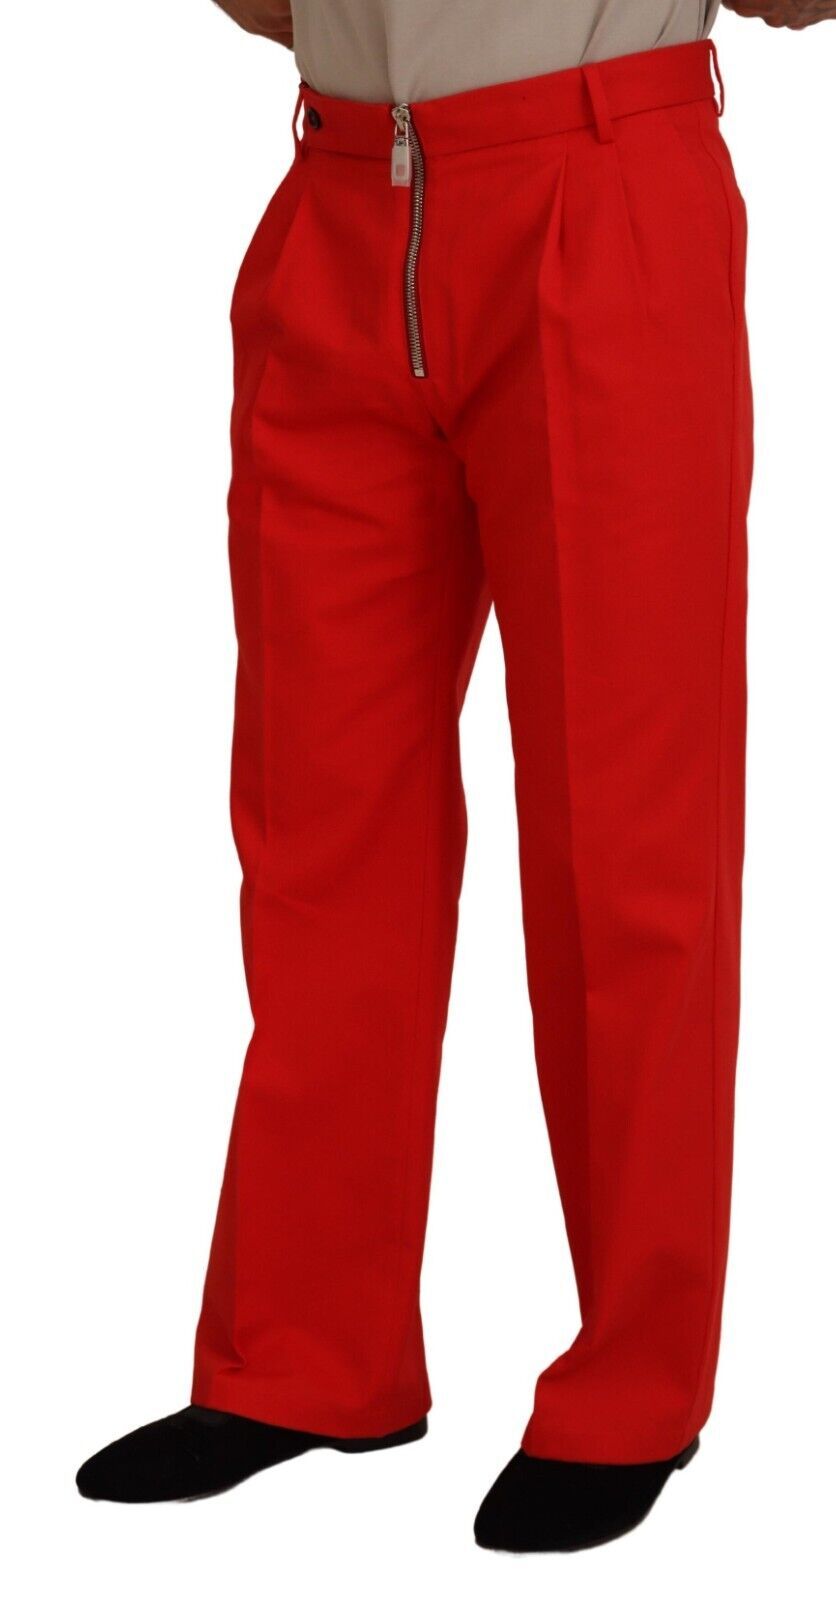 Moncler Men's Cotton Poplin Trousers, Brand Size 46 (Waist Size 30